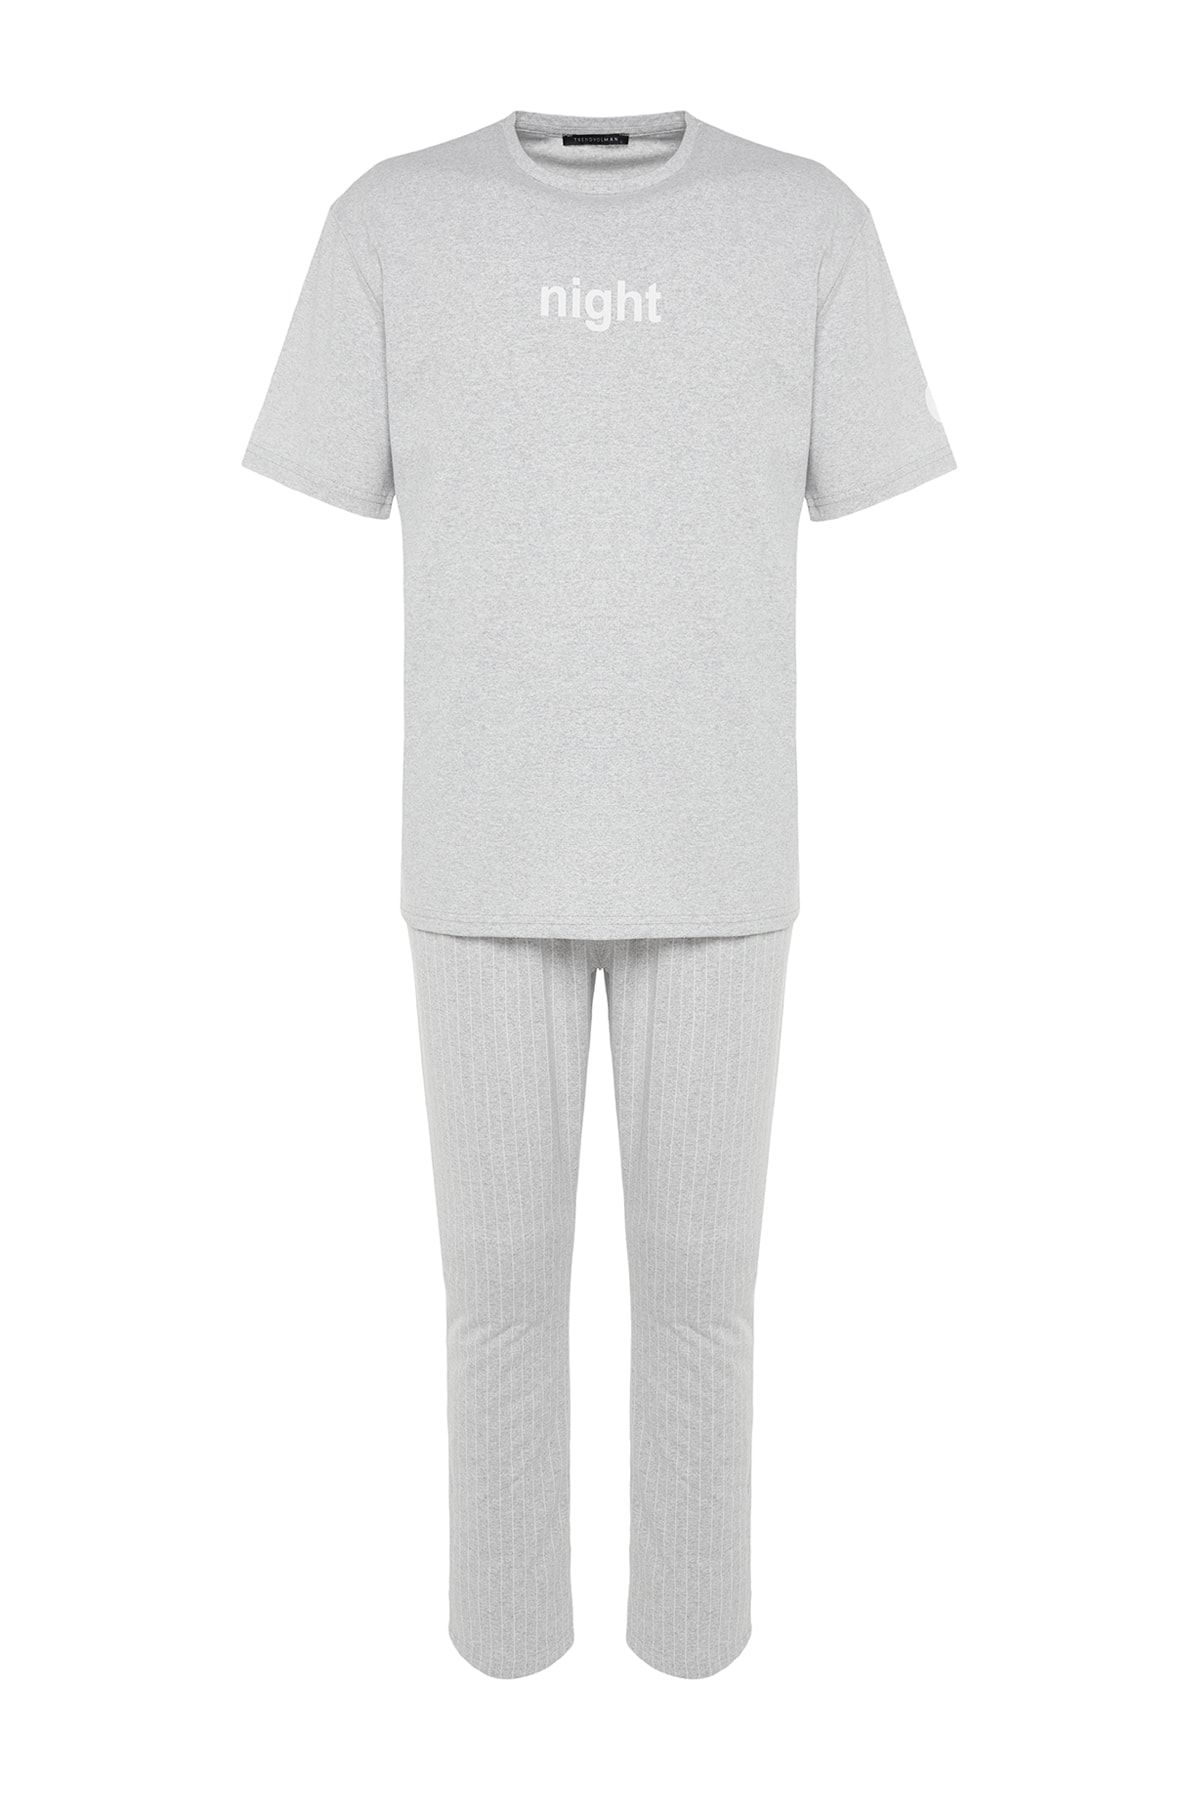 Plaid & Slogan Graphic Pajama Set